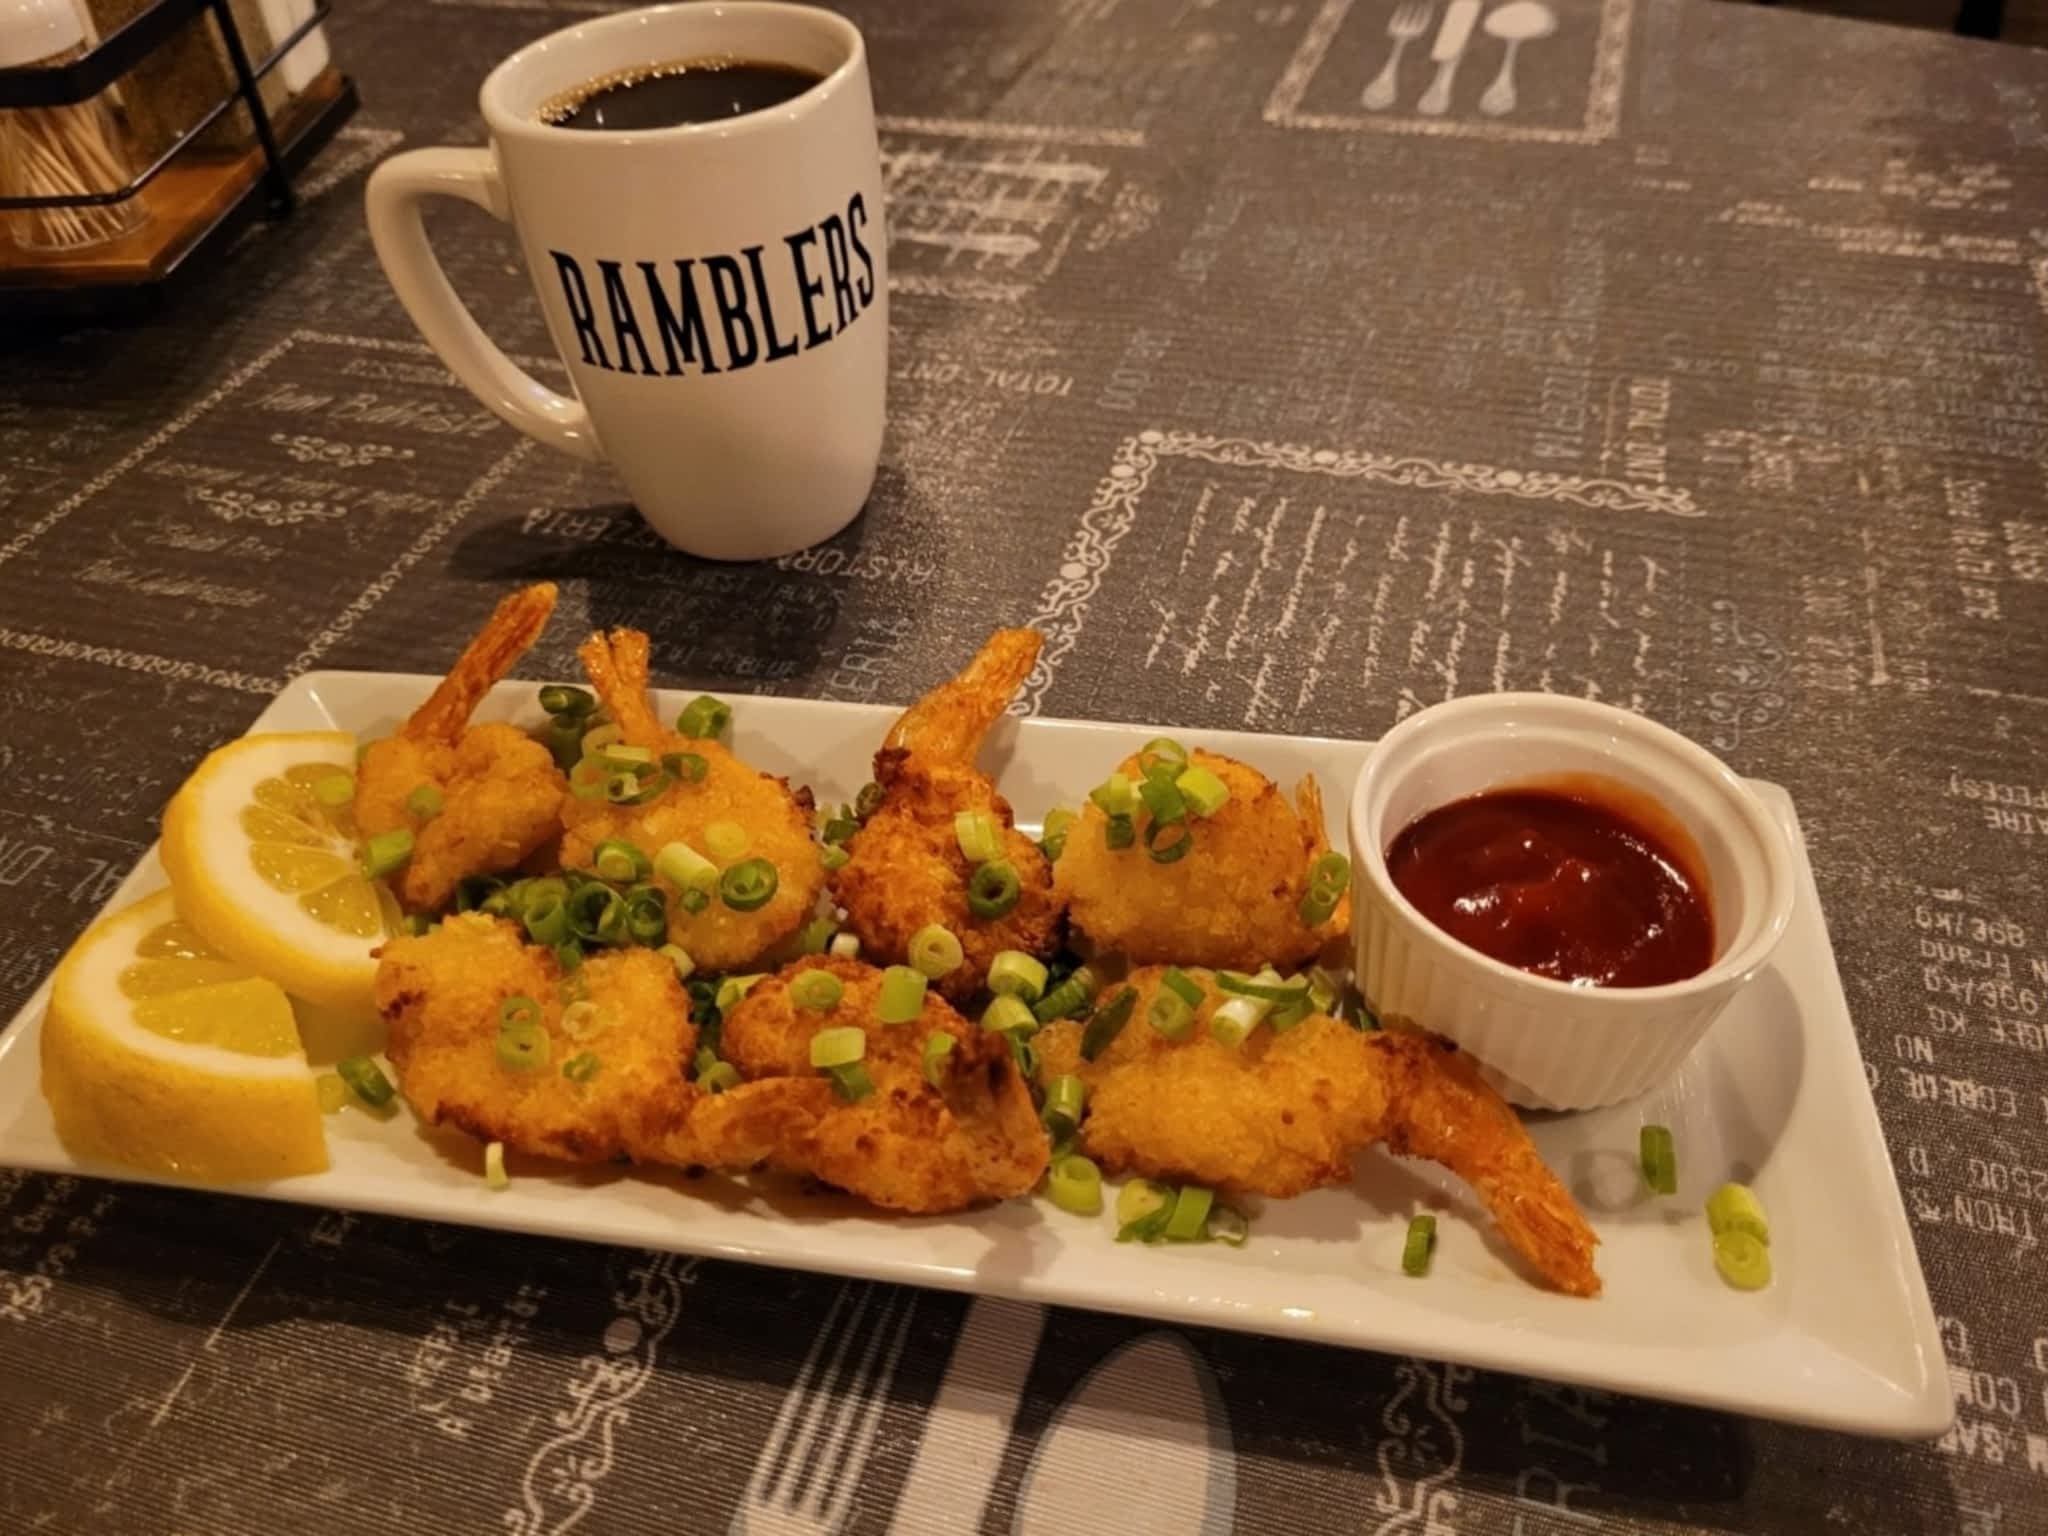 photo Ramblers Restaurant